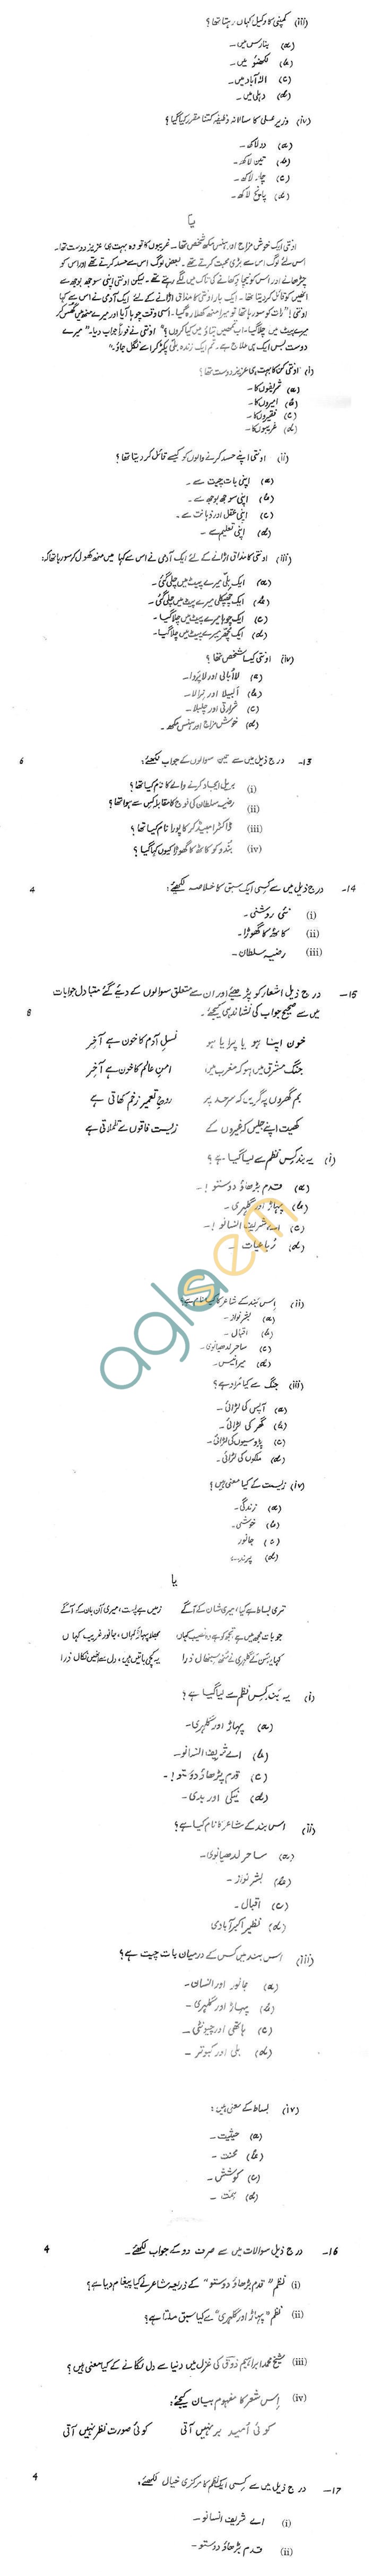 CBSE Compartment Exam 2013 Class X Question Paper - Urdu (Course B)